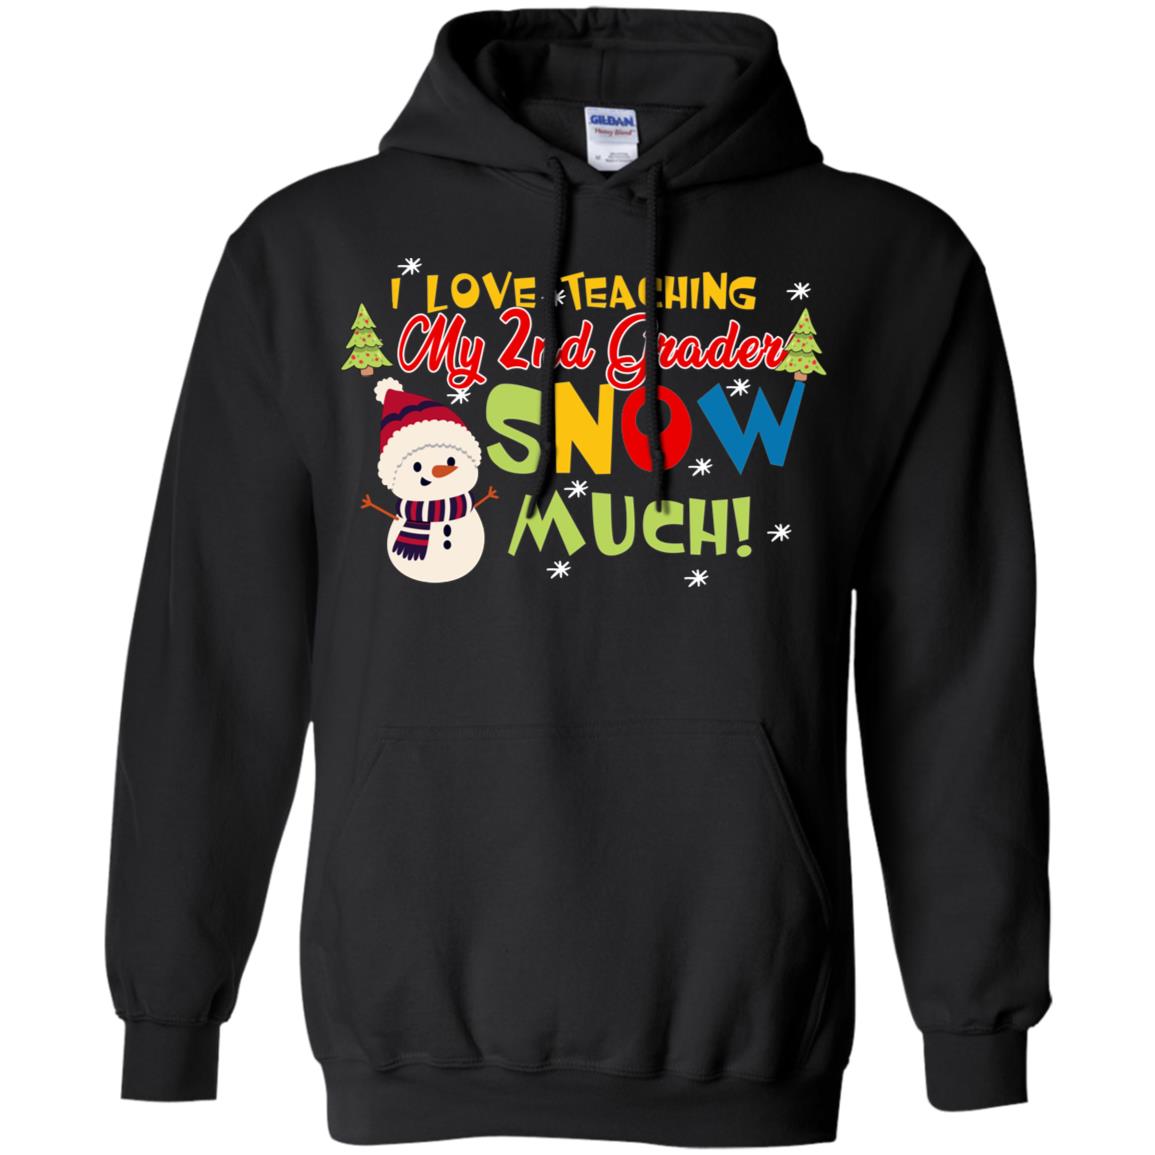 I Love Teaching My 2nd Graders Snow Much X-mas Gift Shirt For TeachersG185 Gildan Pullover Hoodie 8 oz.